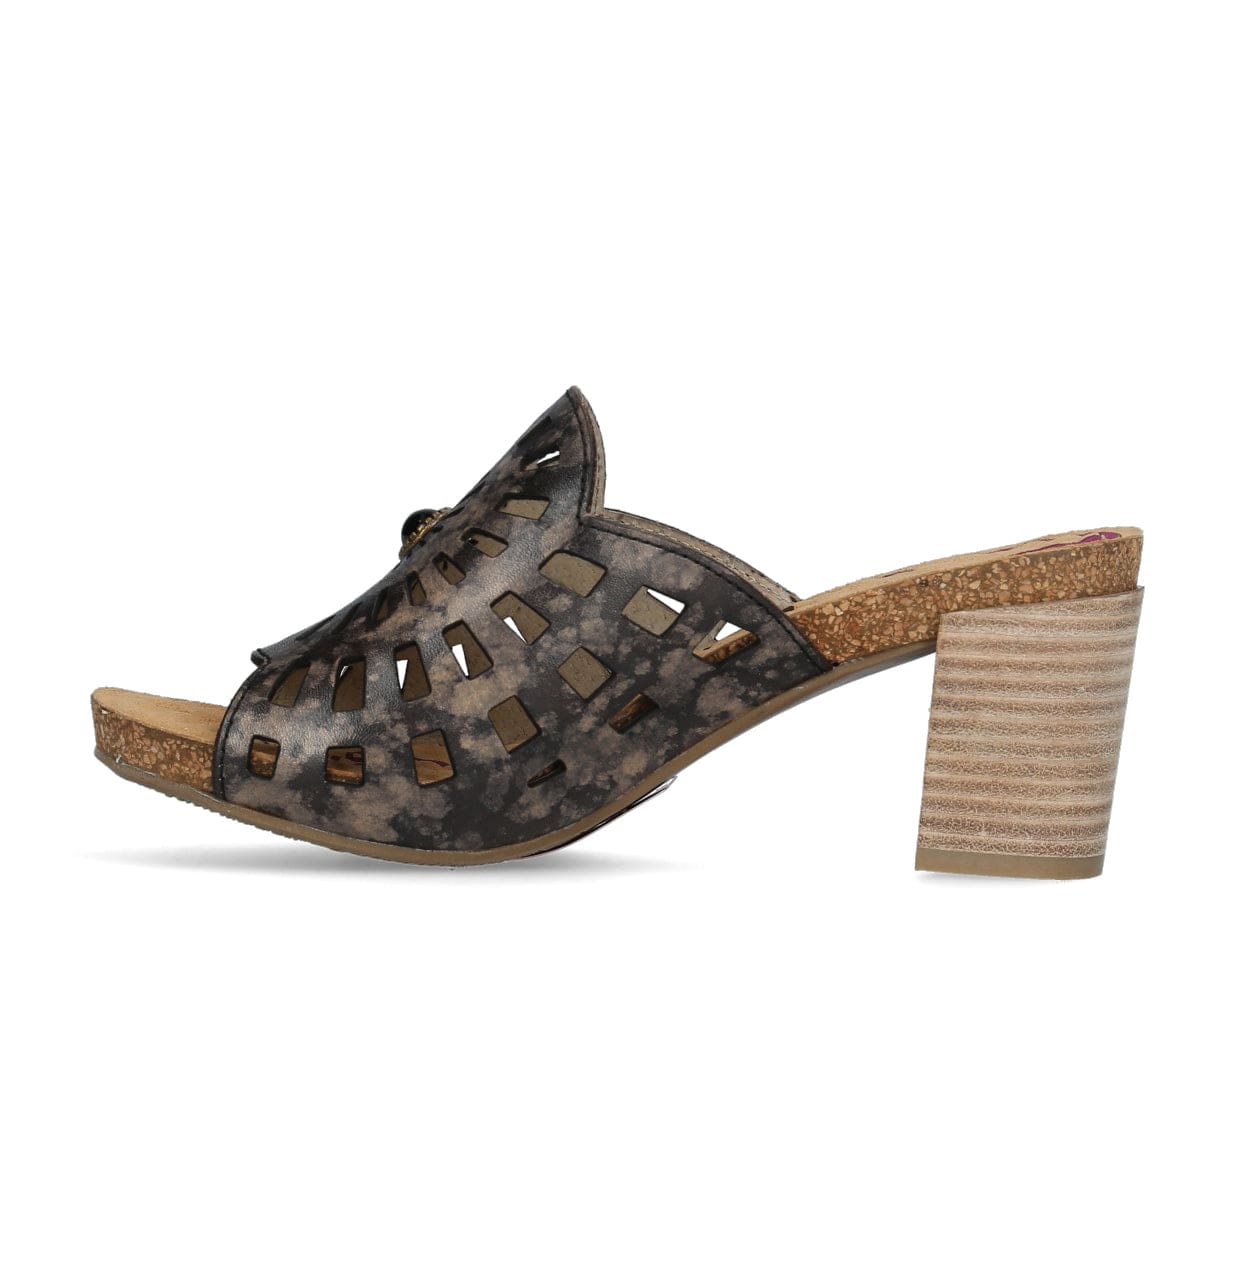 Chaussures HACTO 31 - Sandale